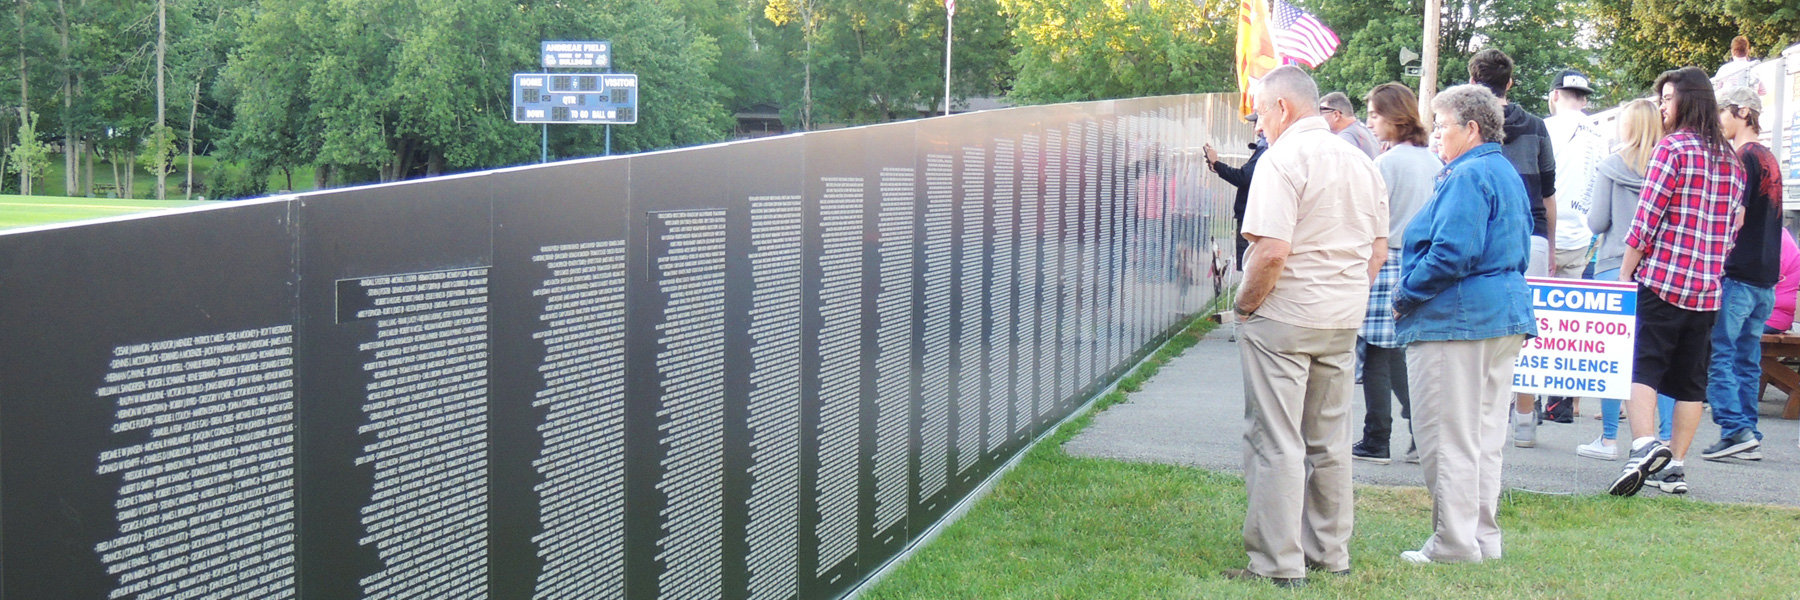 The Traveling Vietnam Memorial